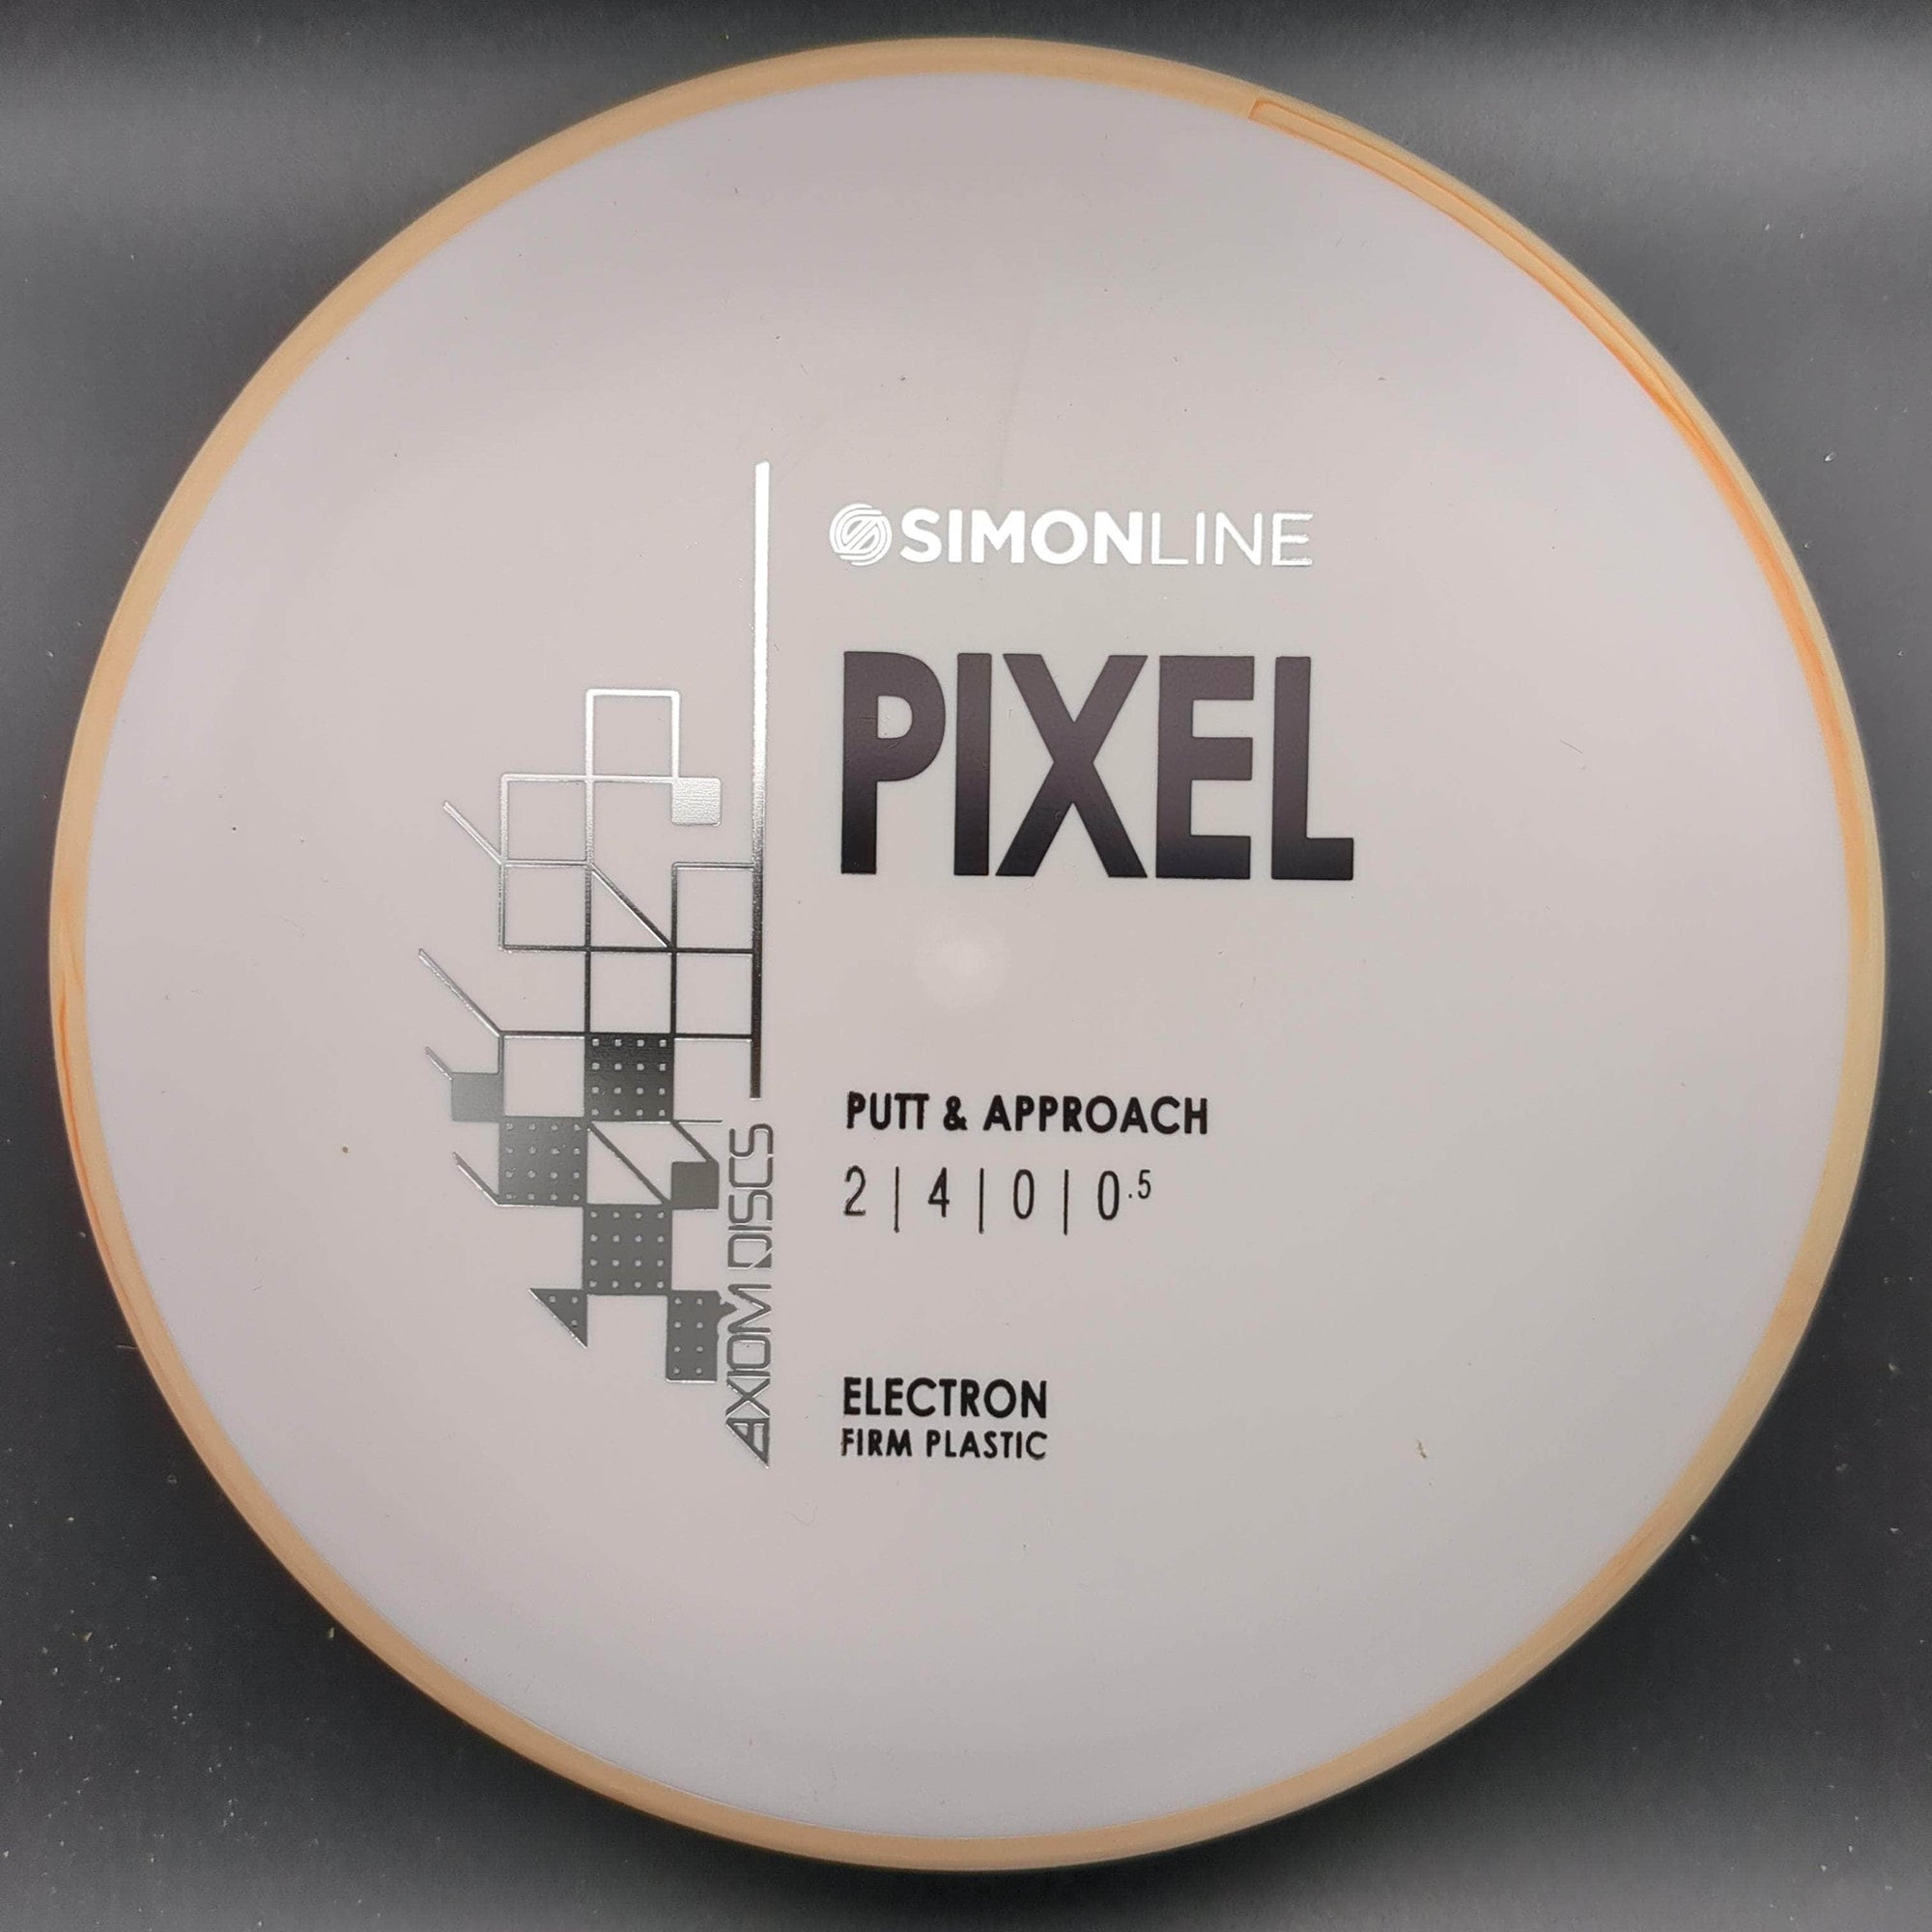 Axiom Putter Sage Rim Blue Plate 174g Pixel, Electron Firm, Simon Line